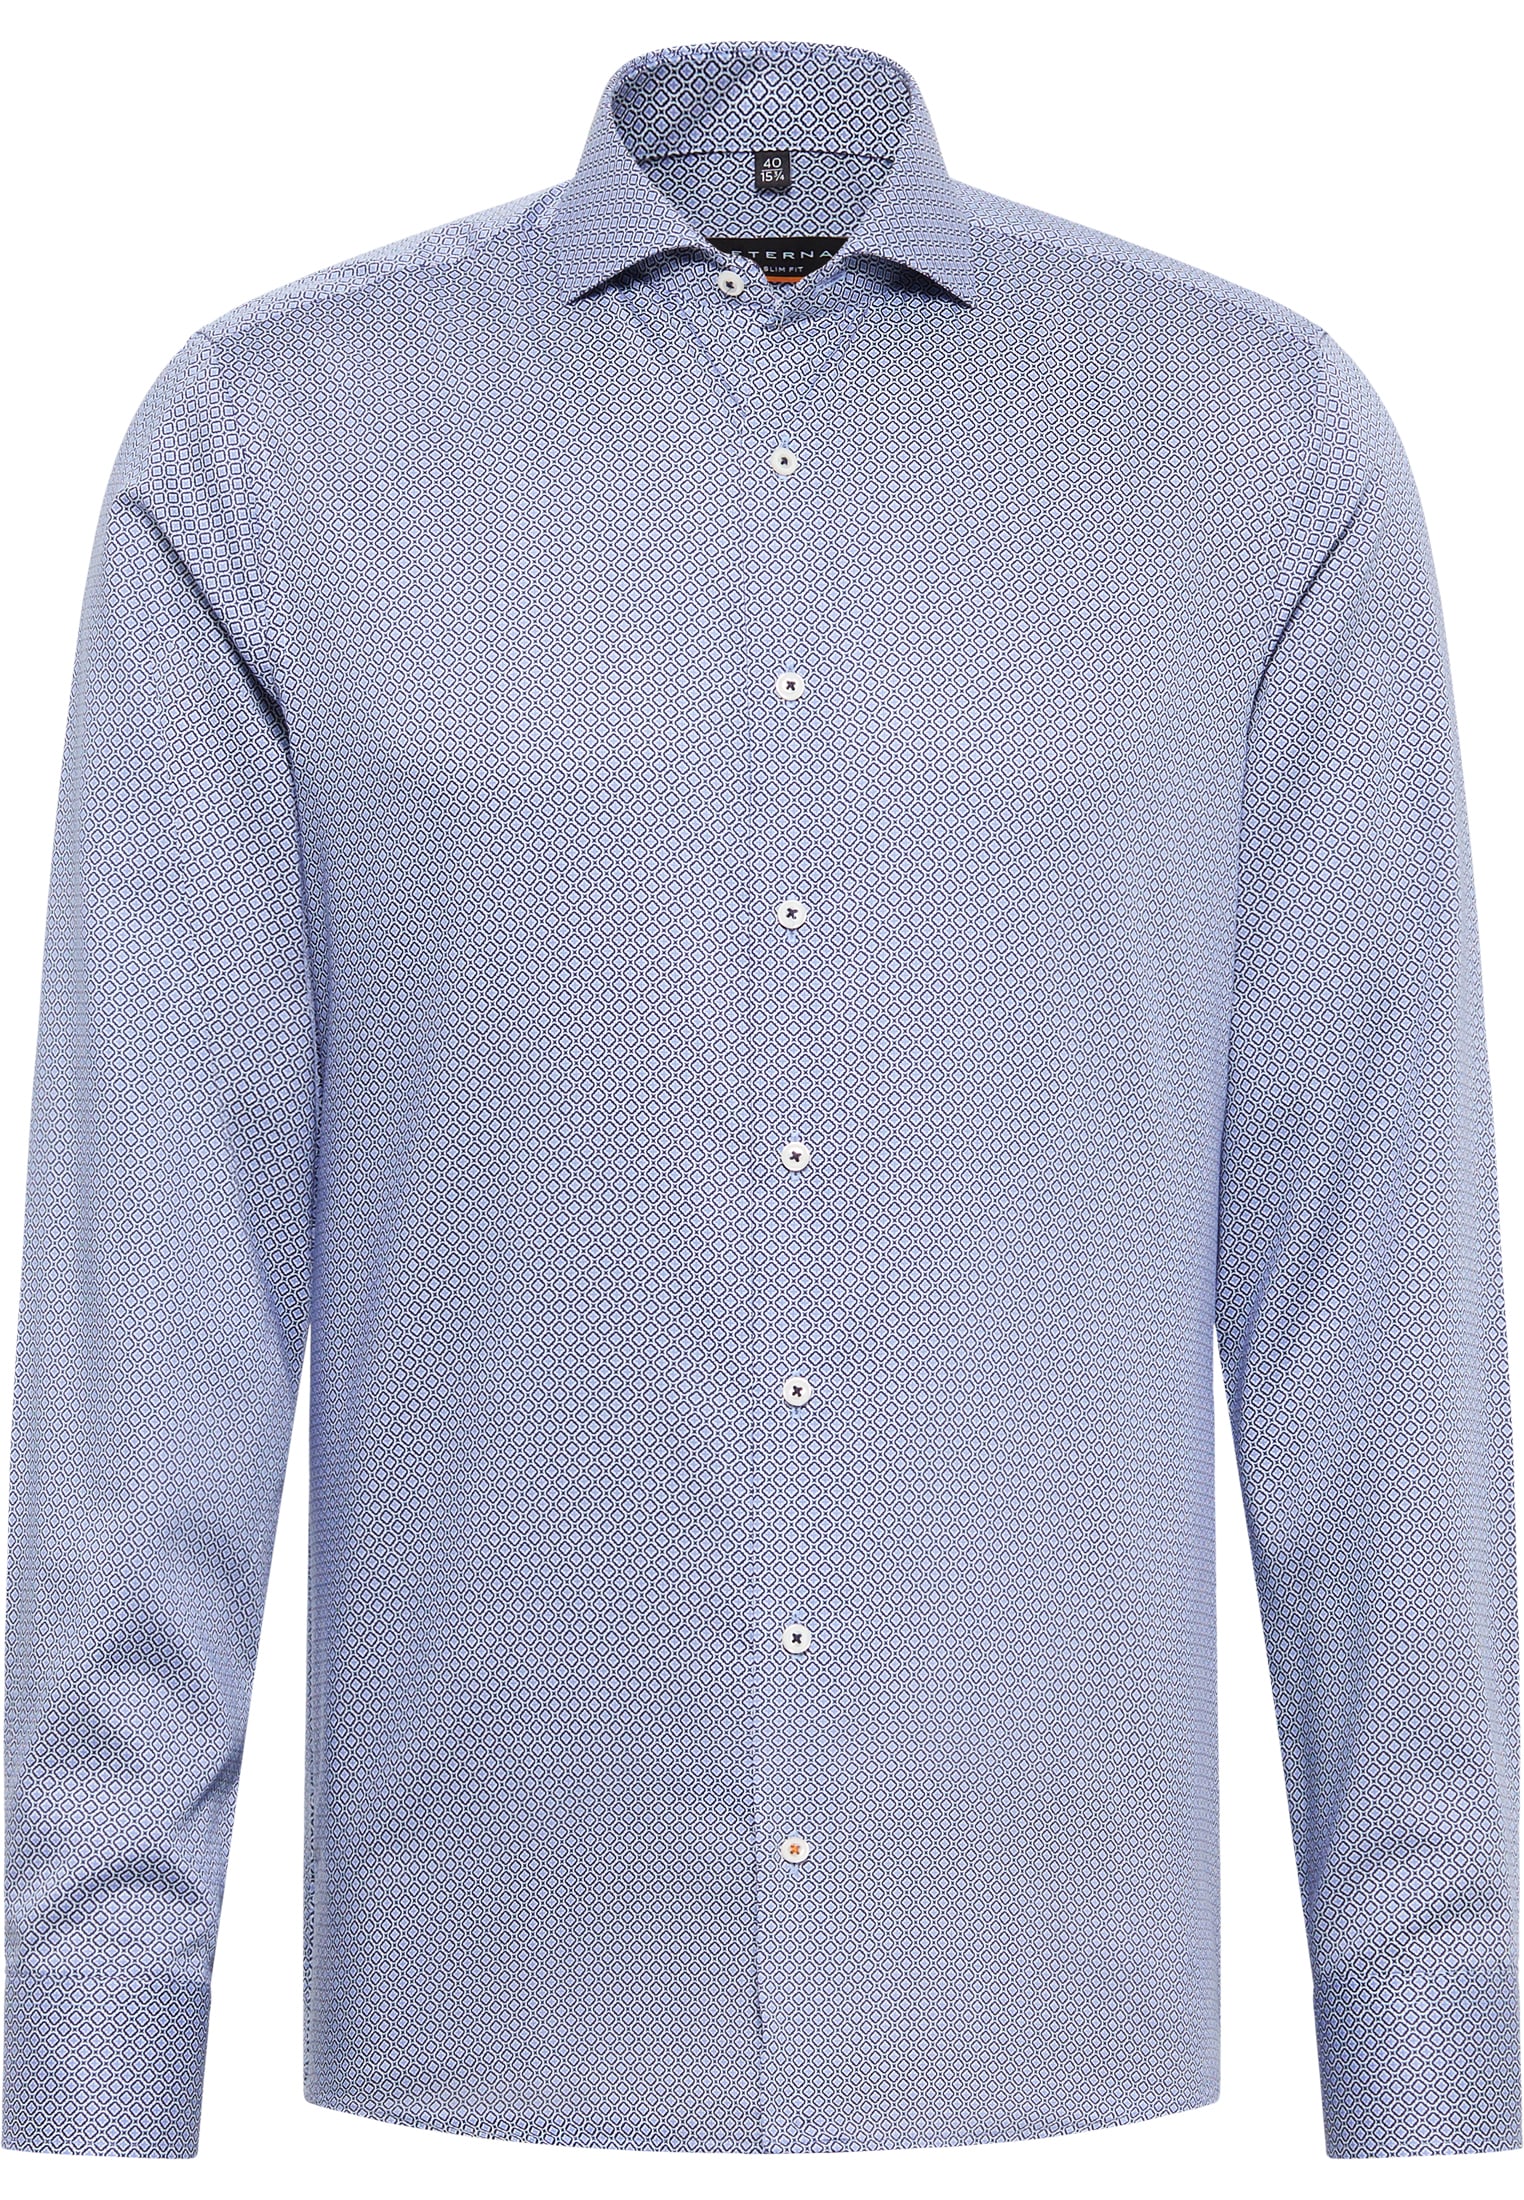 SLIM FIT Shirt in blue/light blue printed